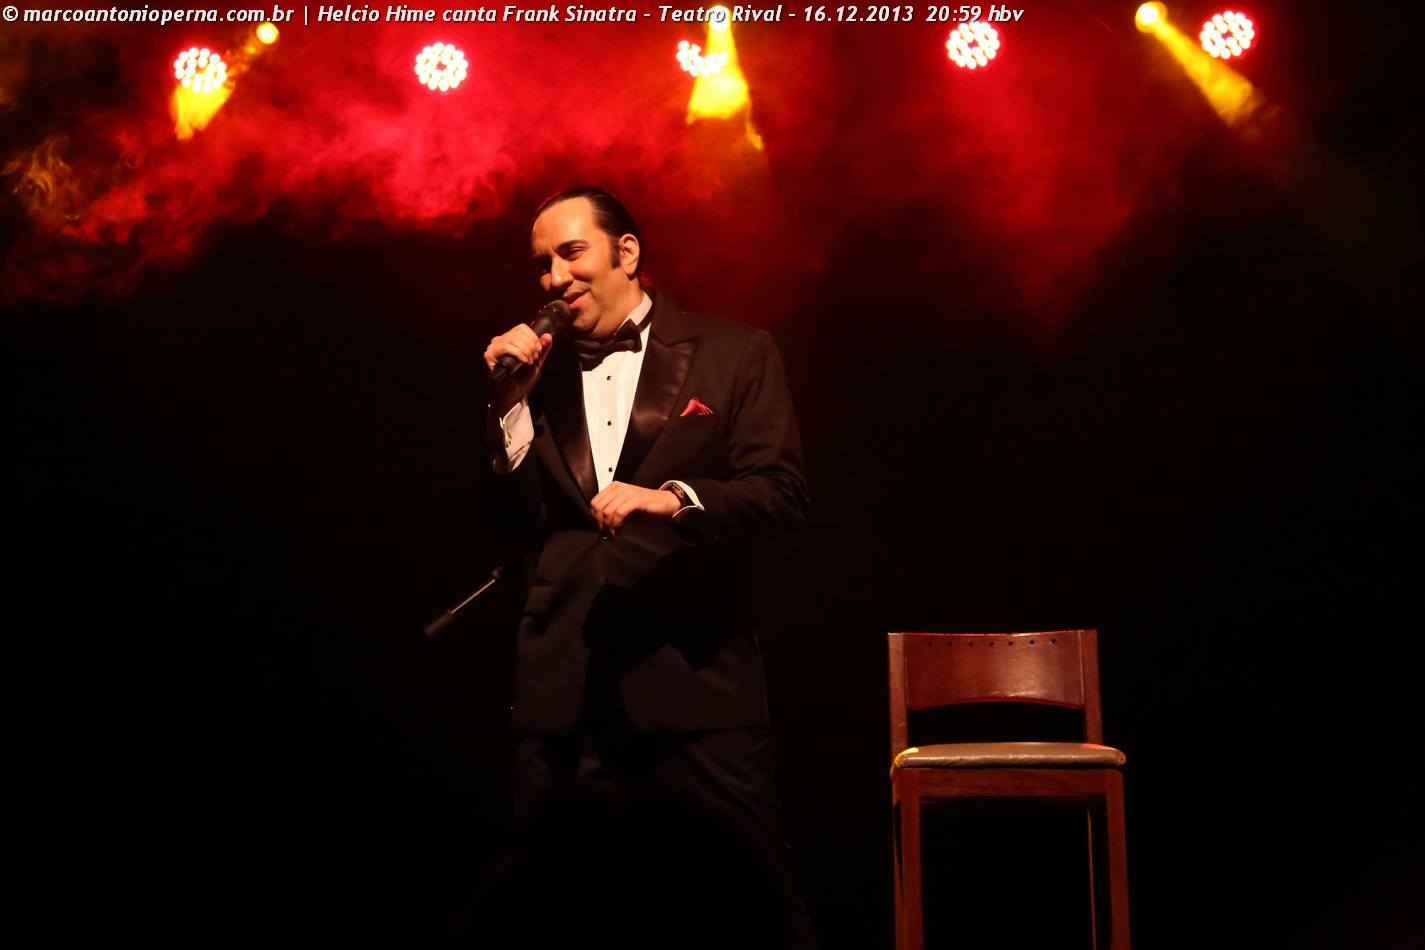 Helcio Hime canta Frank Sinatra - Teatro Rival - Cinelândia - Rio de Janeiro - RJ - 16.12.2013.